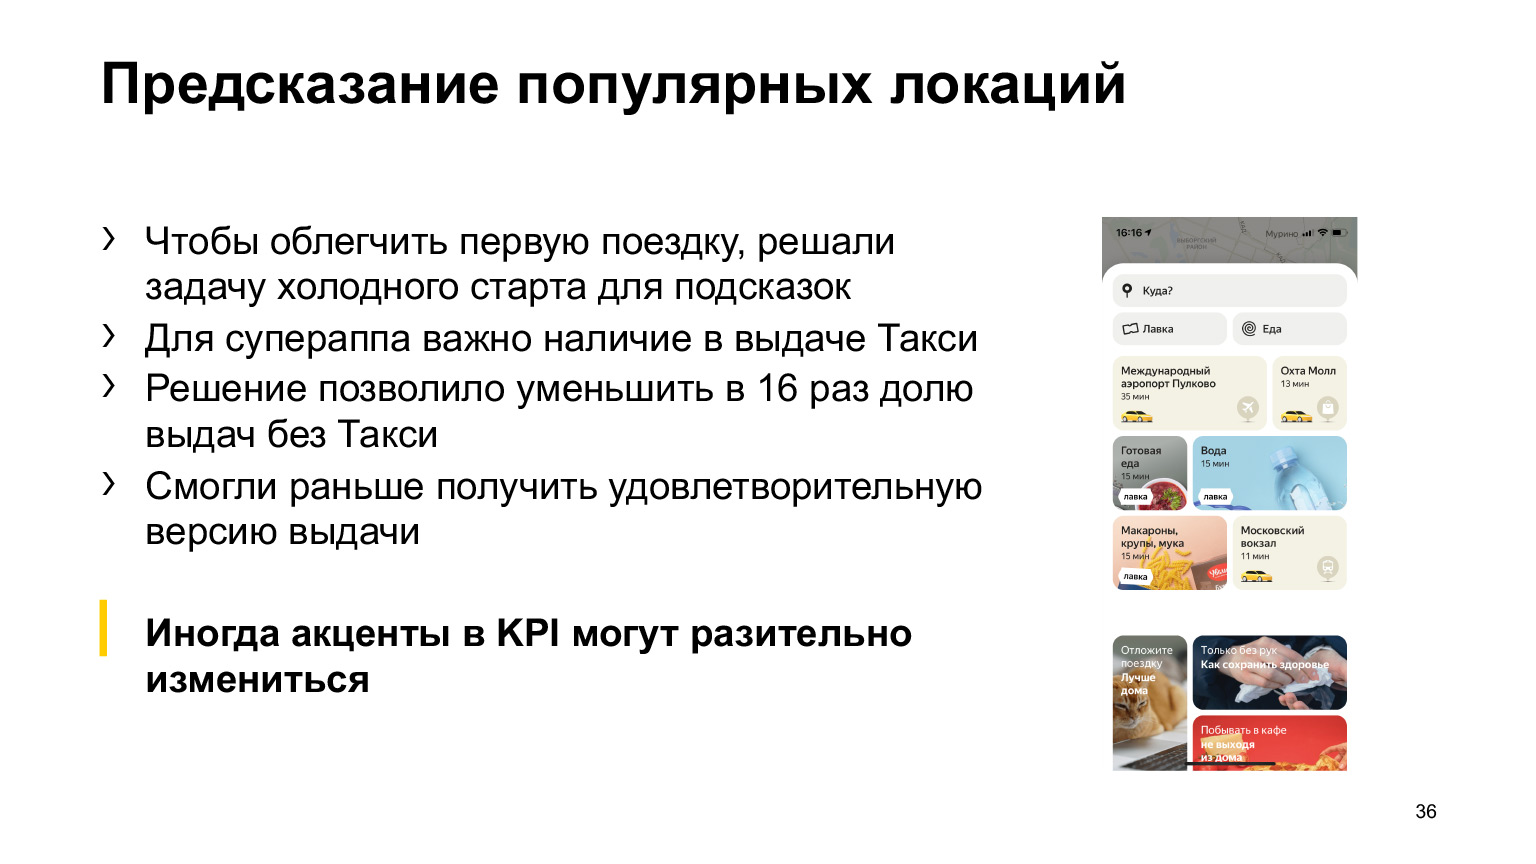 Как коронавирус повлиял на ML-проекты Такси, Еды и Лавки. Доклад Яндекса - 13